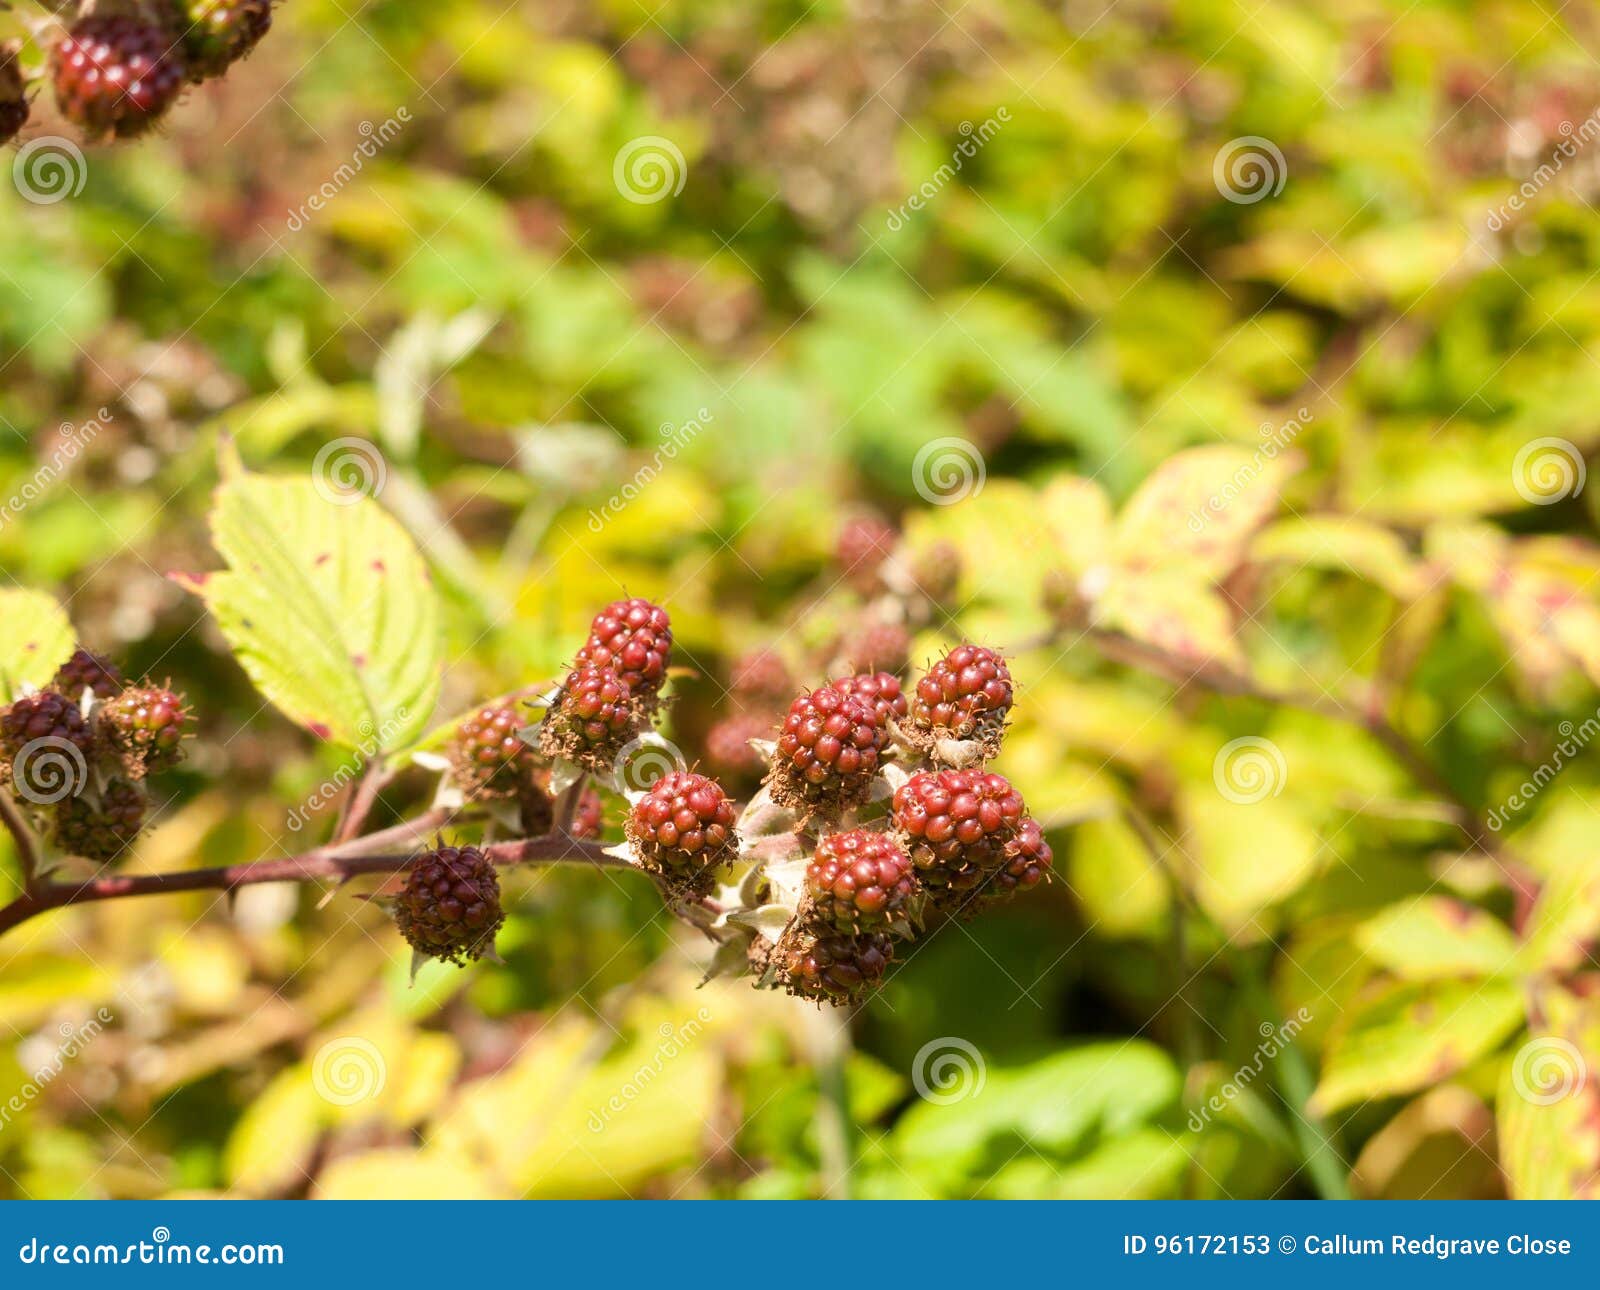 Growing Red Blackberries Bush Outside In Summer Fruit Stock Image Image Of Natural Harvest